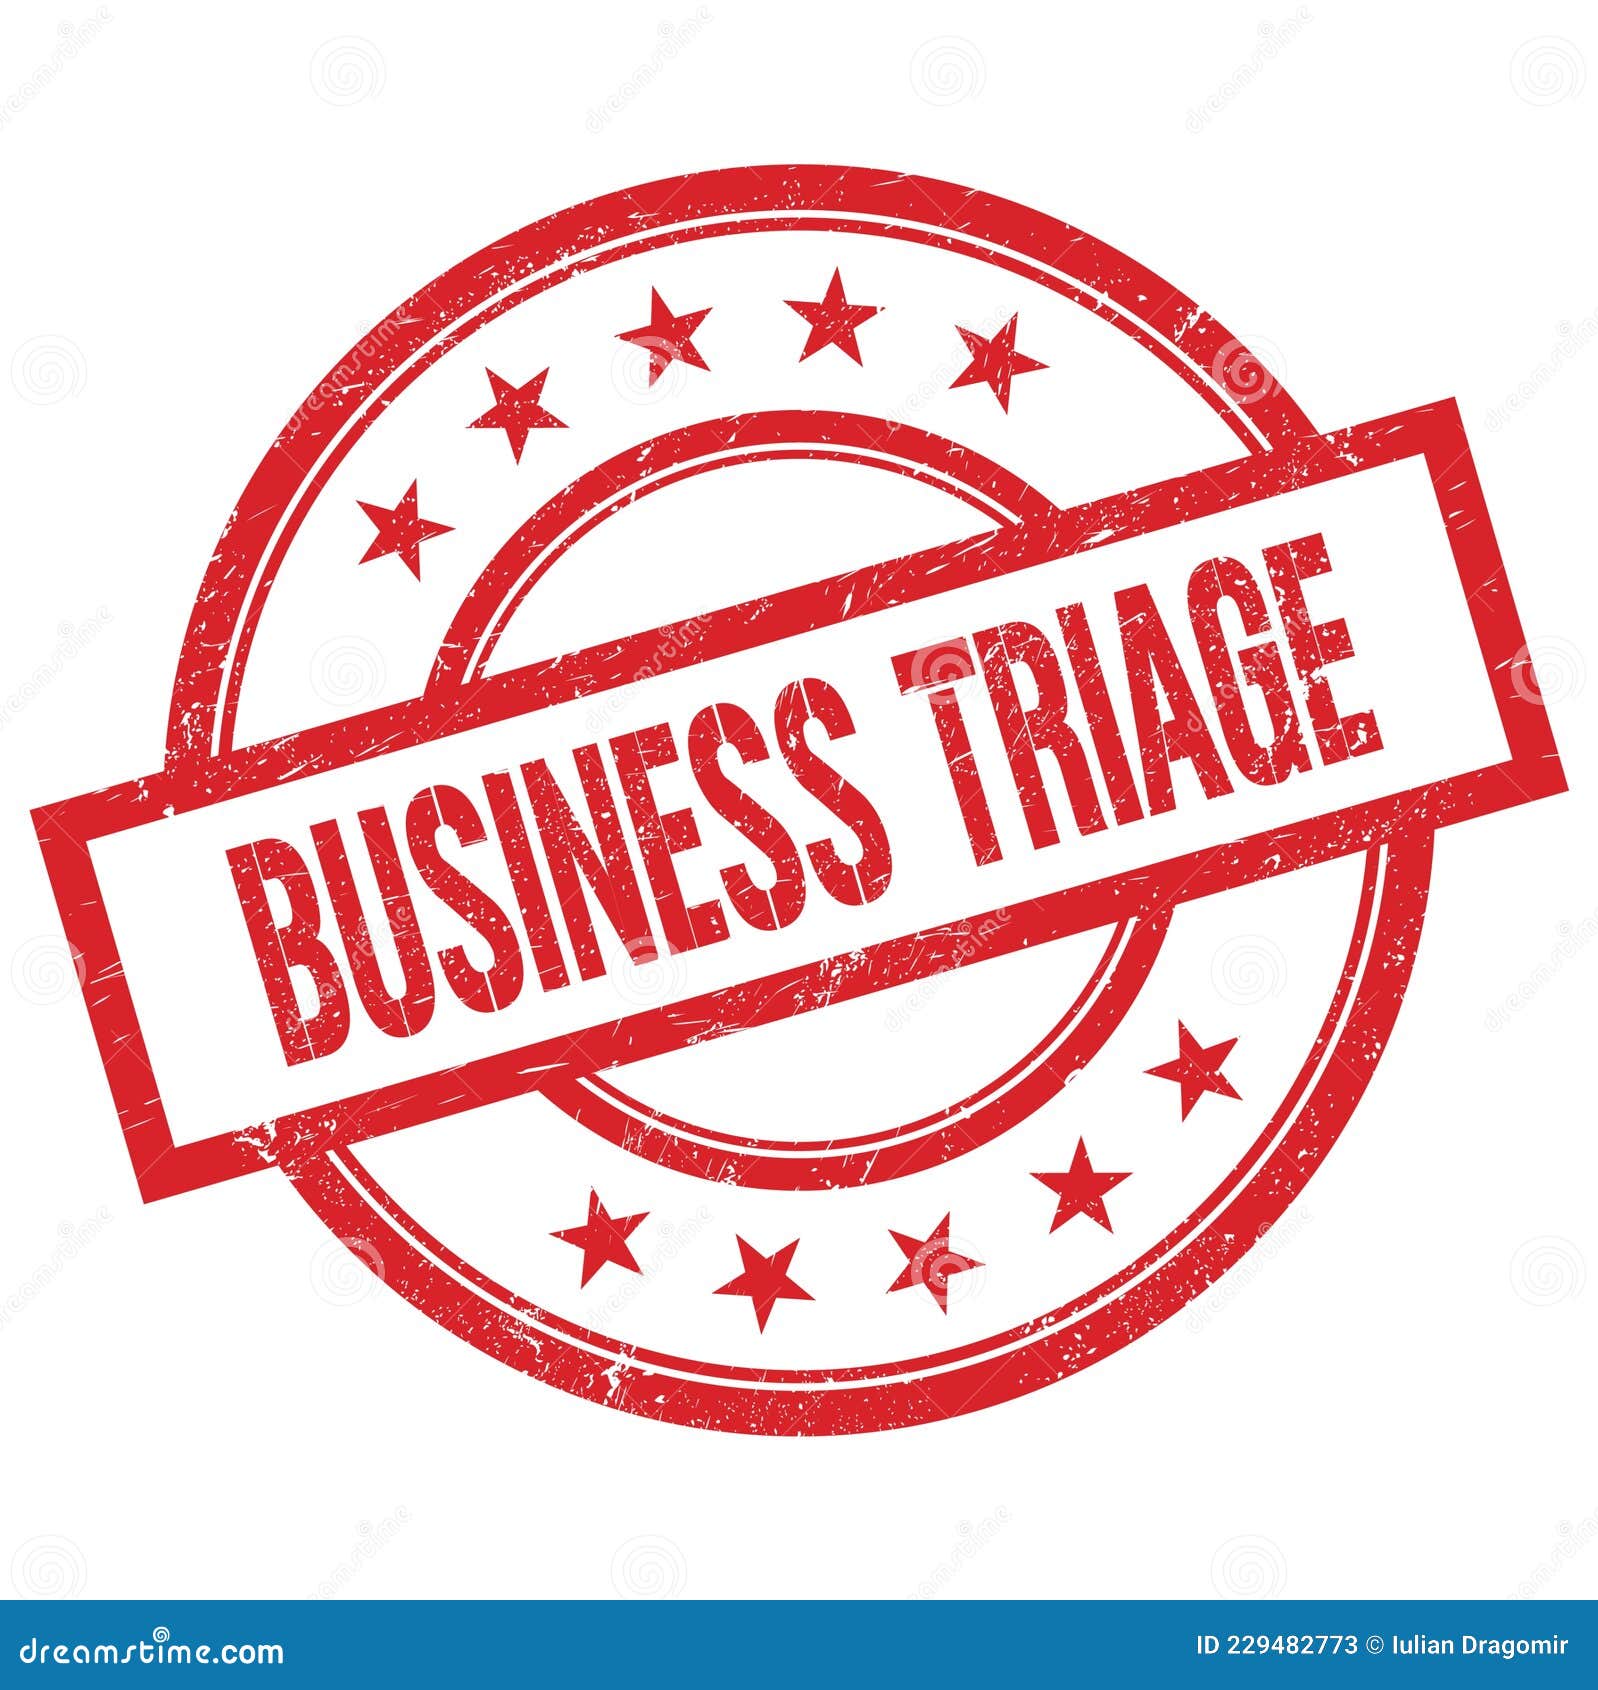 business triage text written on red vintage round stamp